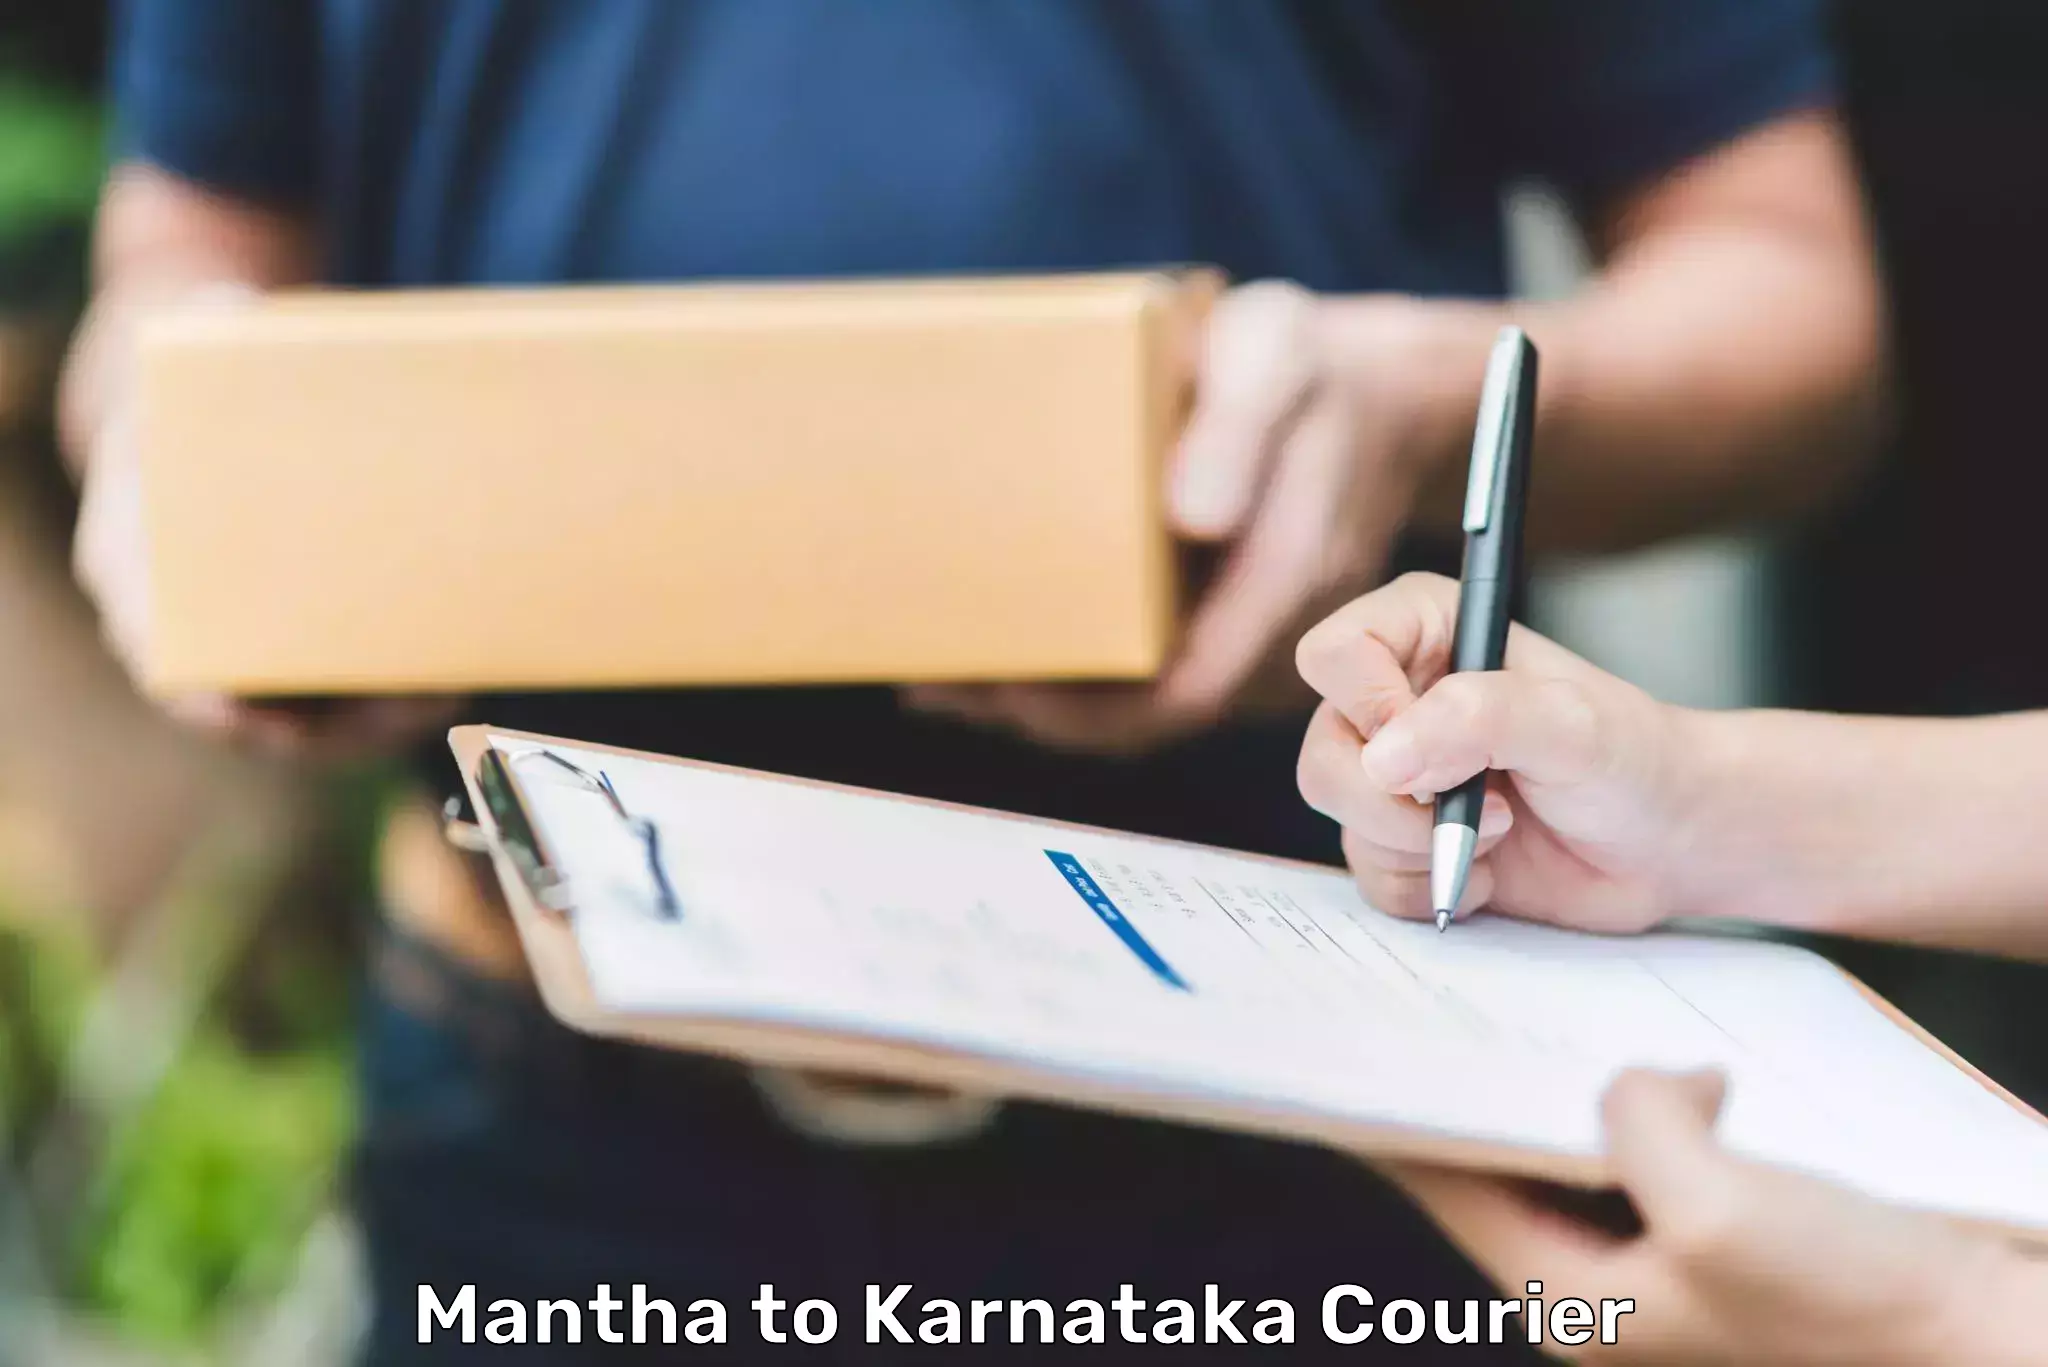 Professional courier handling Mantha to Karnataka